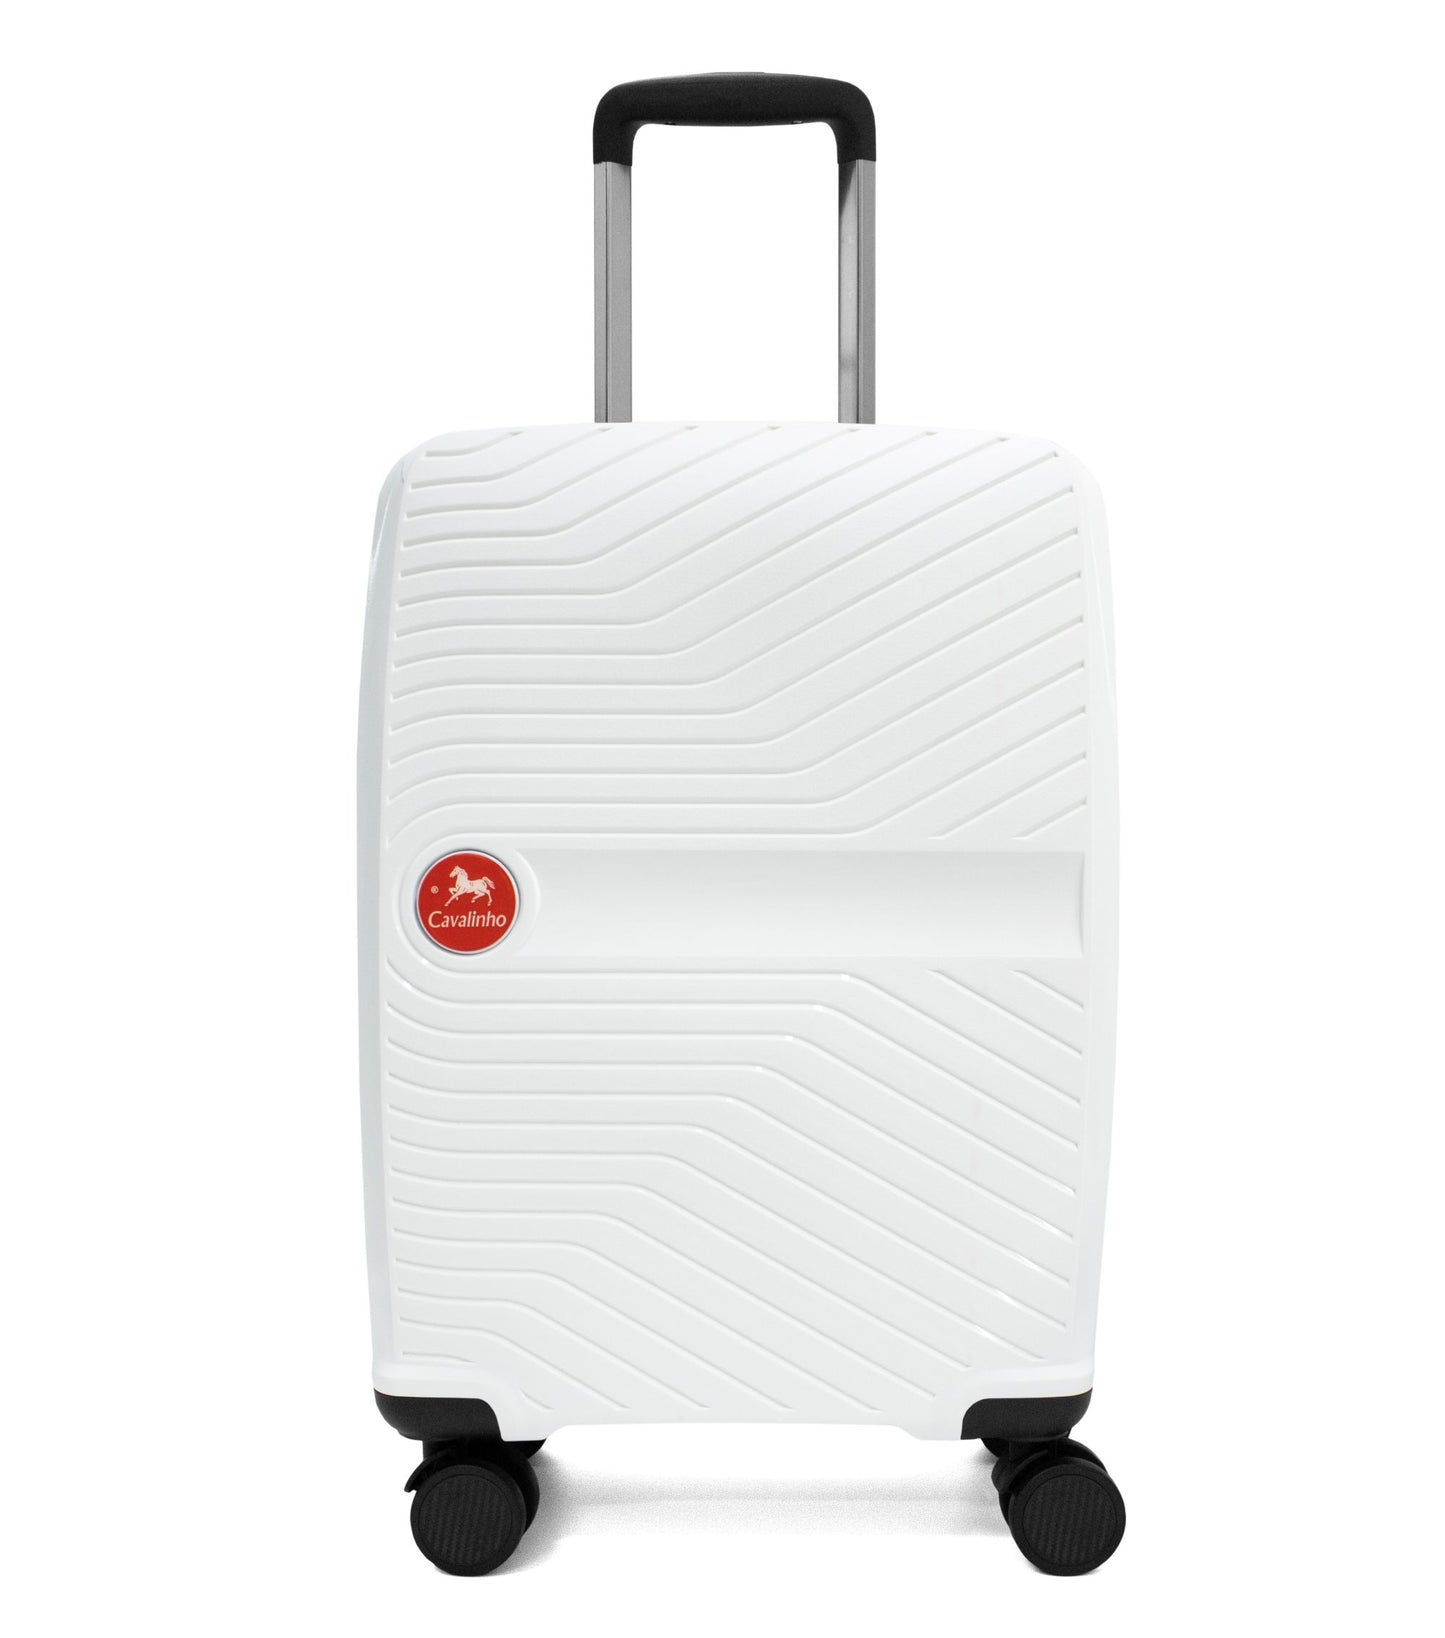 Cavalinho Colorful Carry-on Hardside Luggage (19") - 19 inch White - 68020004.06.19_1